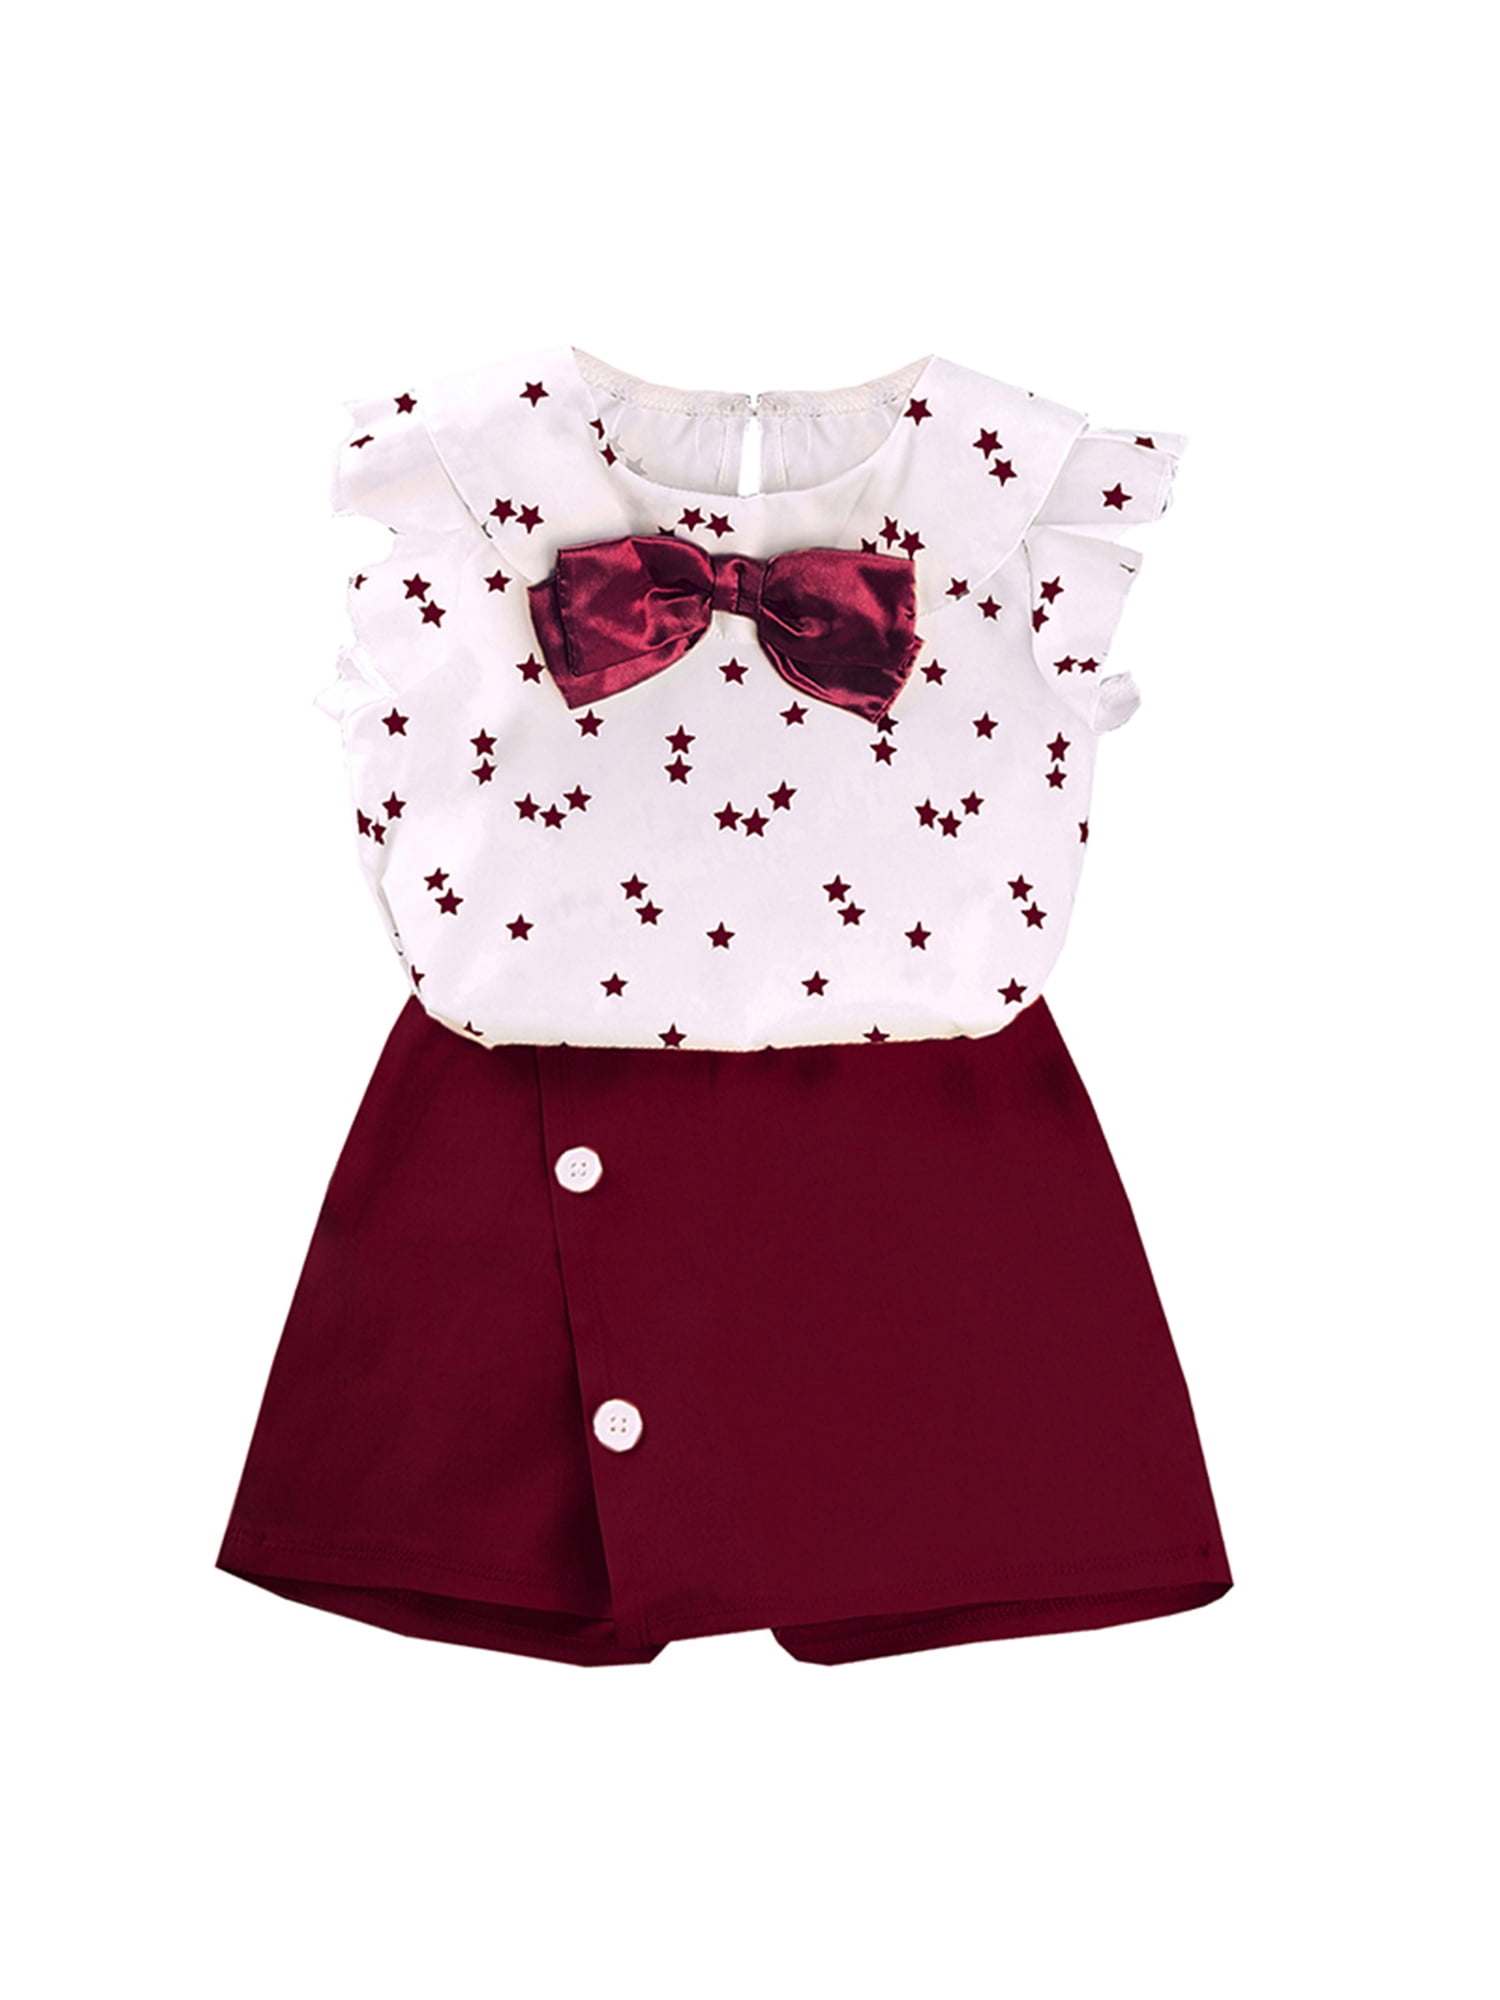 Girls Top Skirt Two-Piece Suit Summer Red Bow Little Girl Mini Skirt